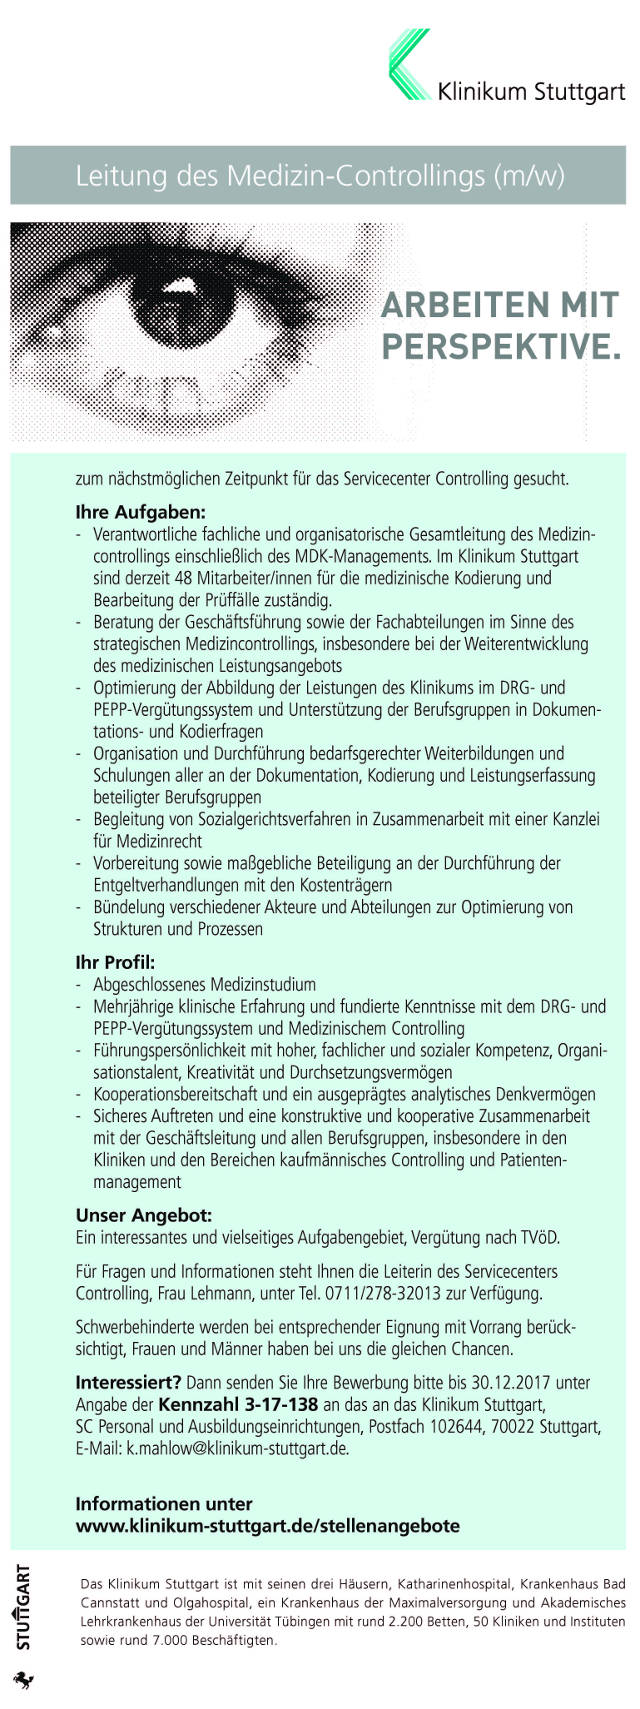 Klinikum Stuttgart: Leitung des Medizin-Controllings (m/w)